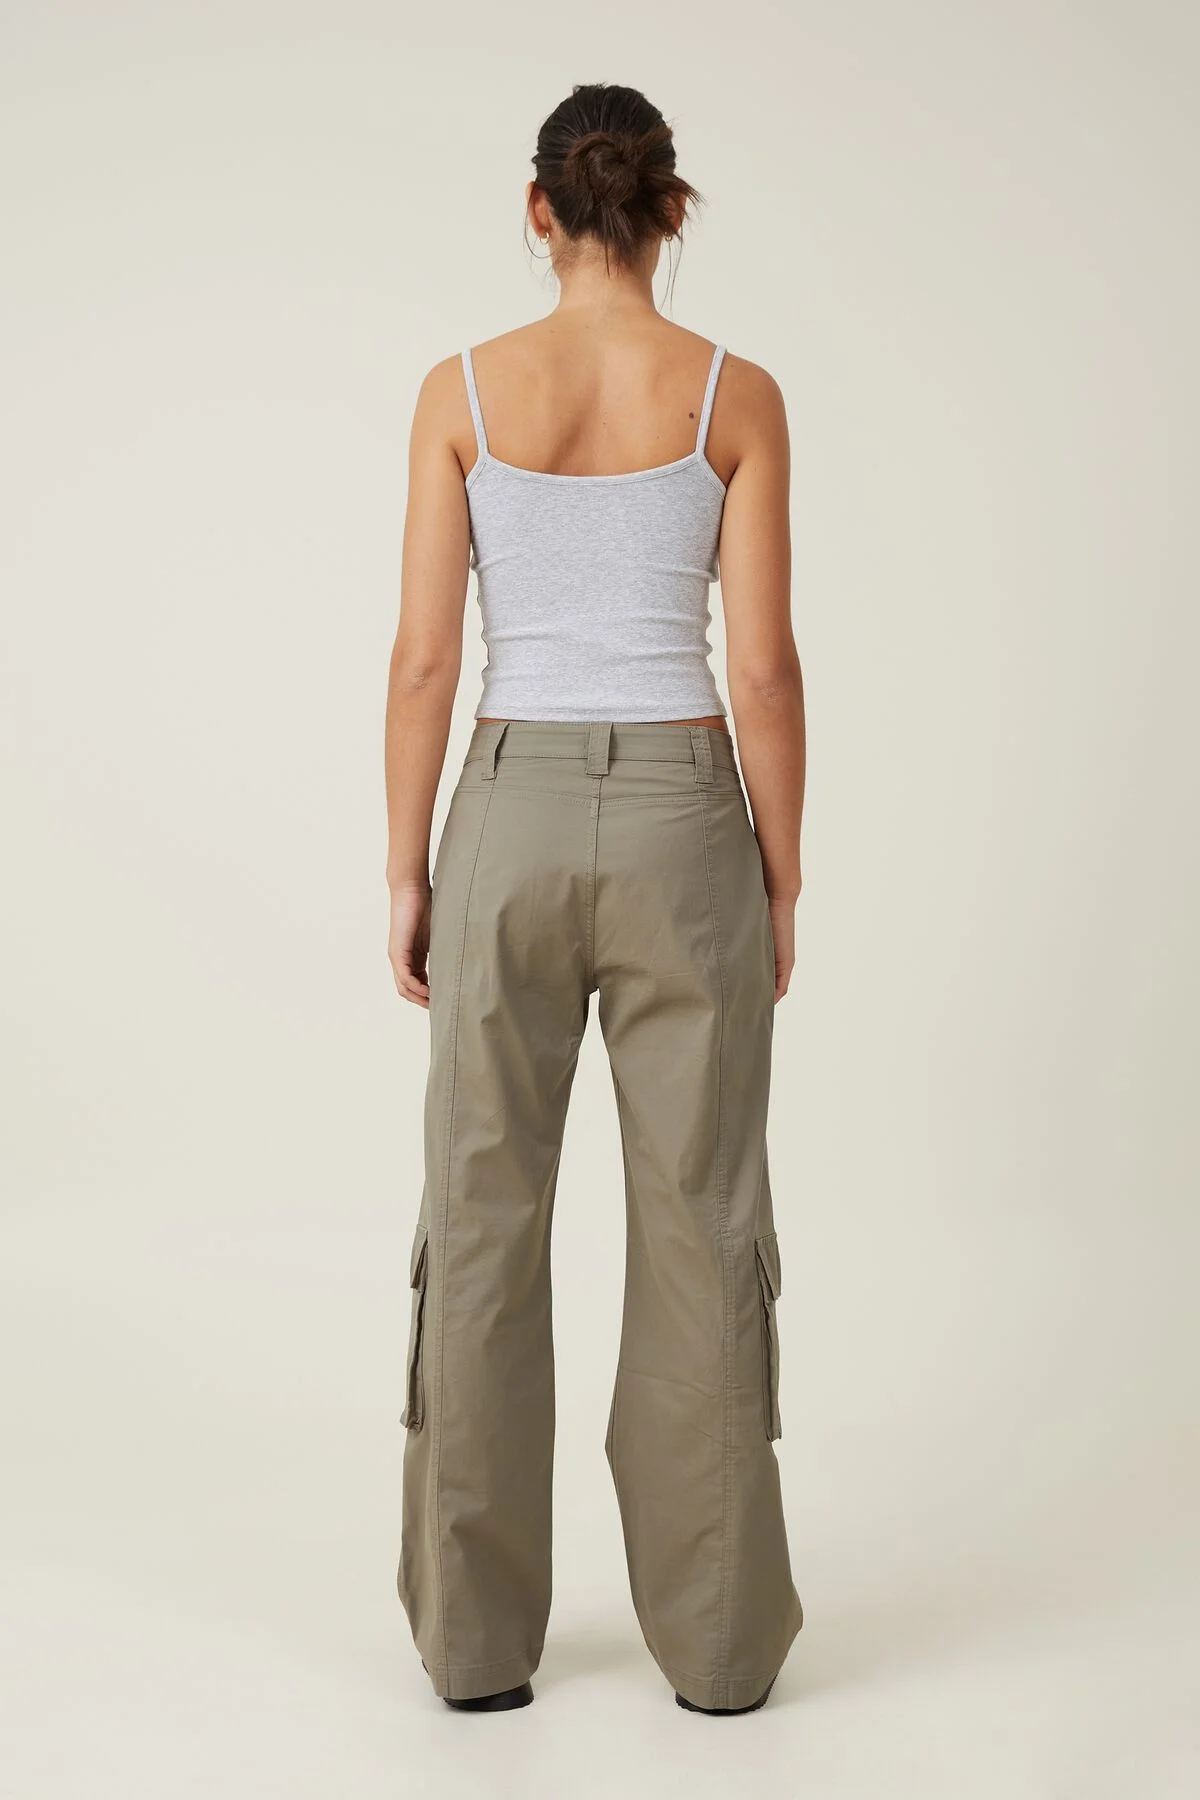 Cotton On Body + Hayden Cargo Pant